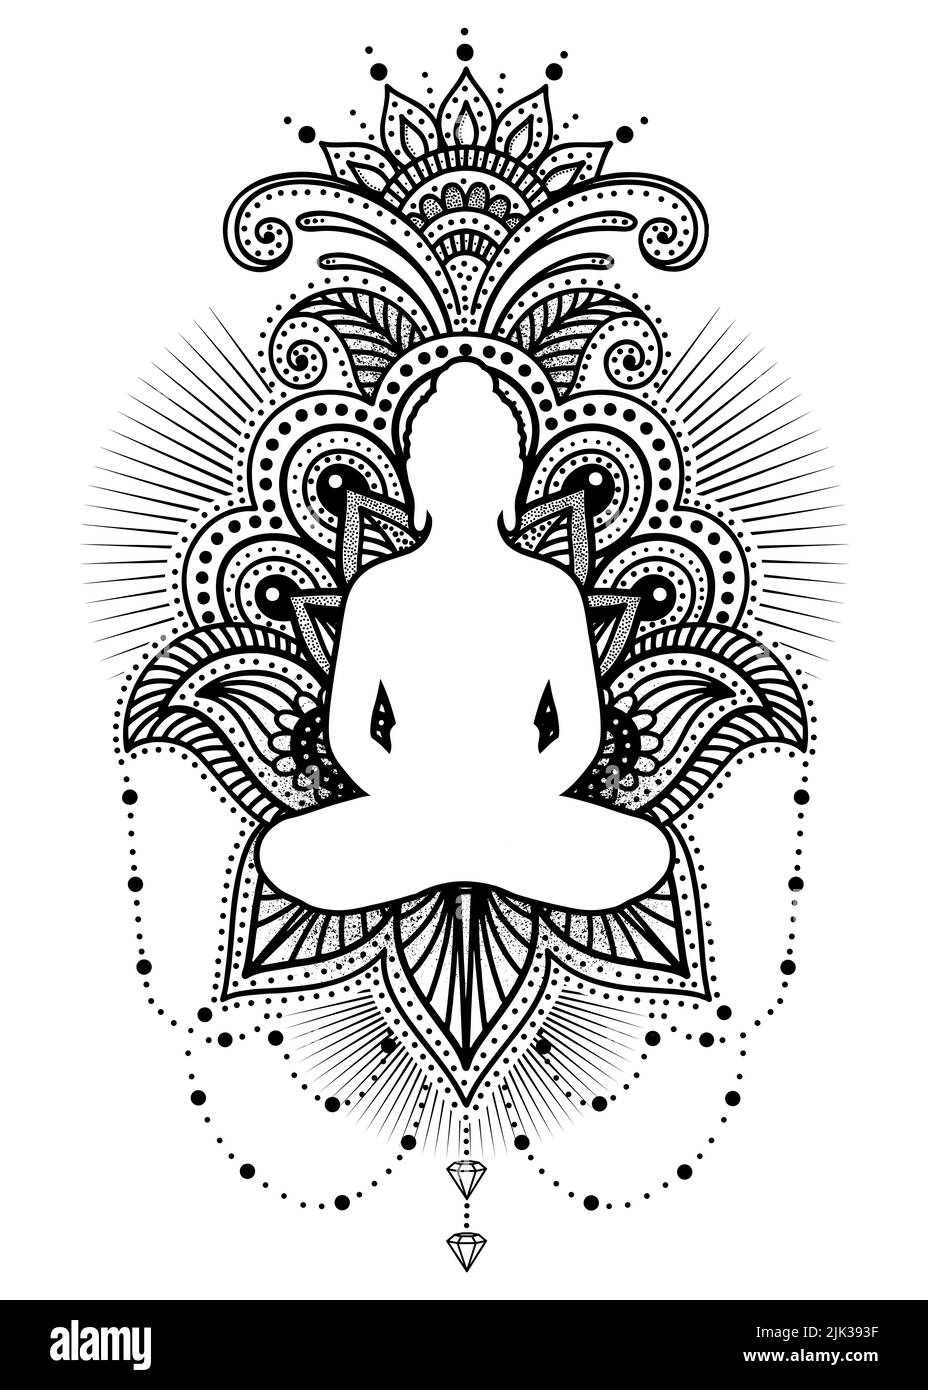 Yoga Buddha - Spiritual Meditation Graphic Stock Photo